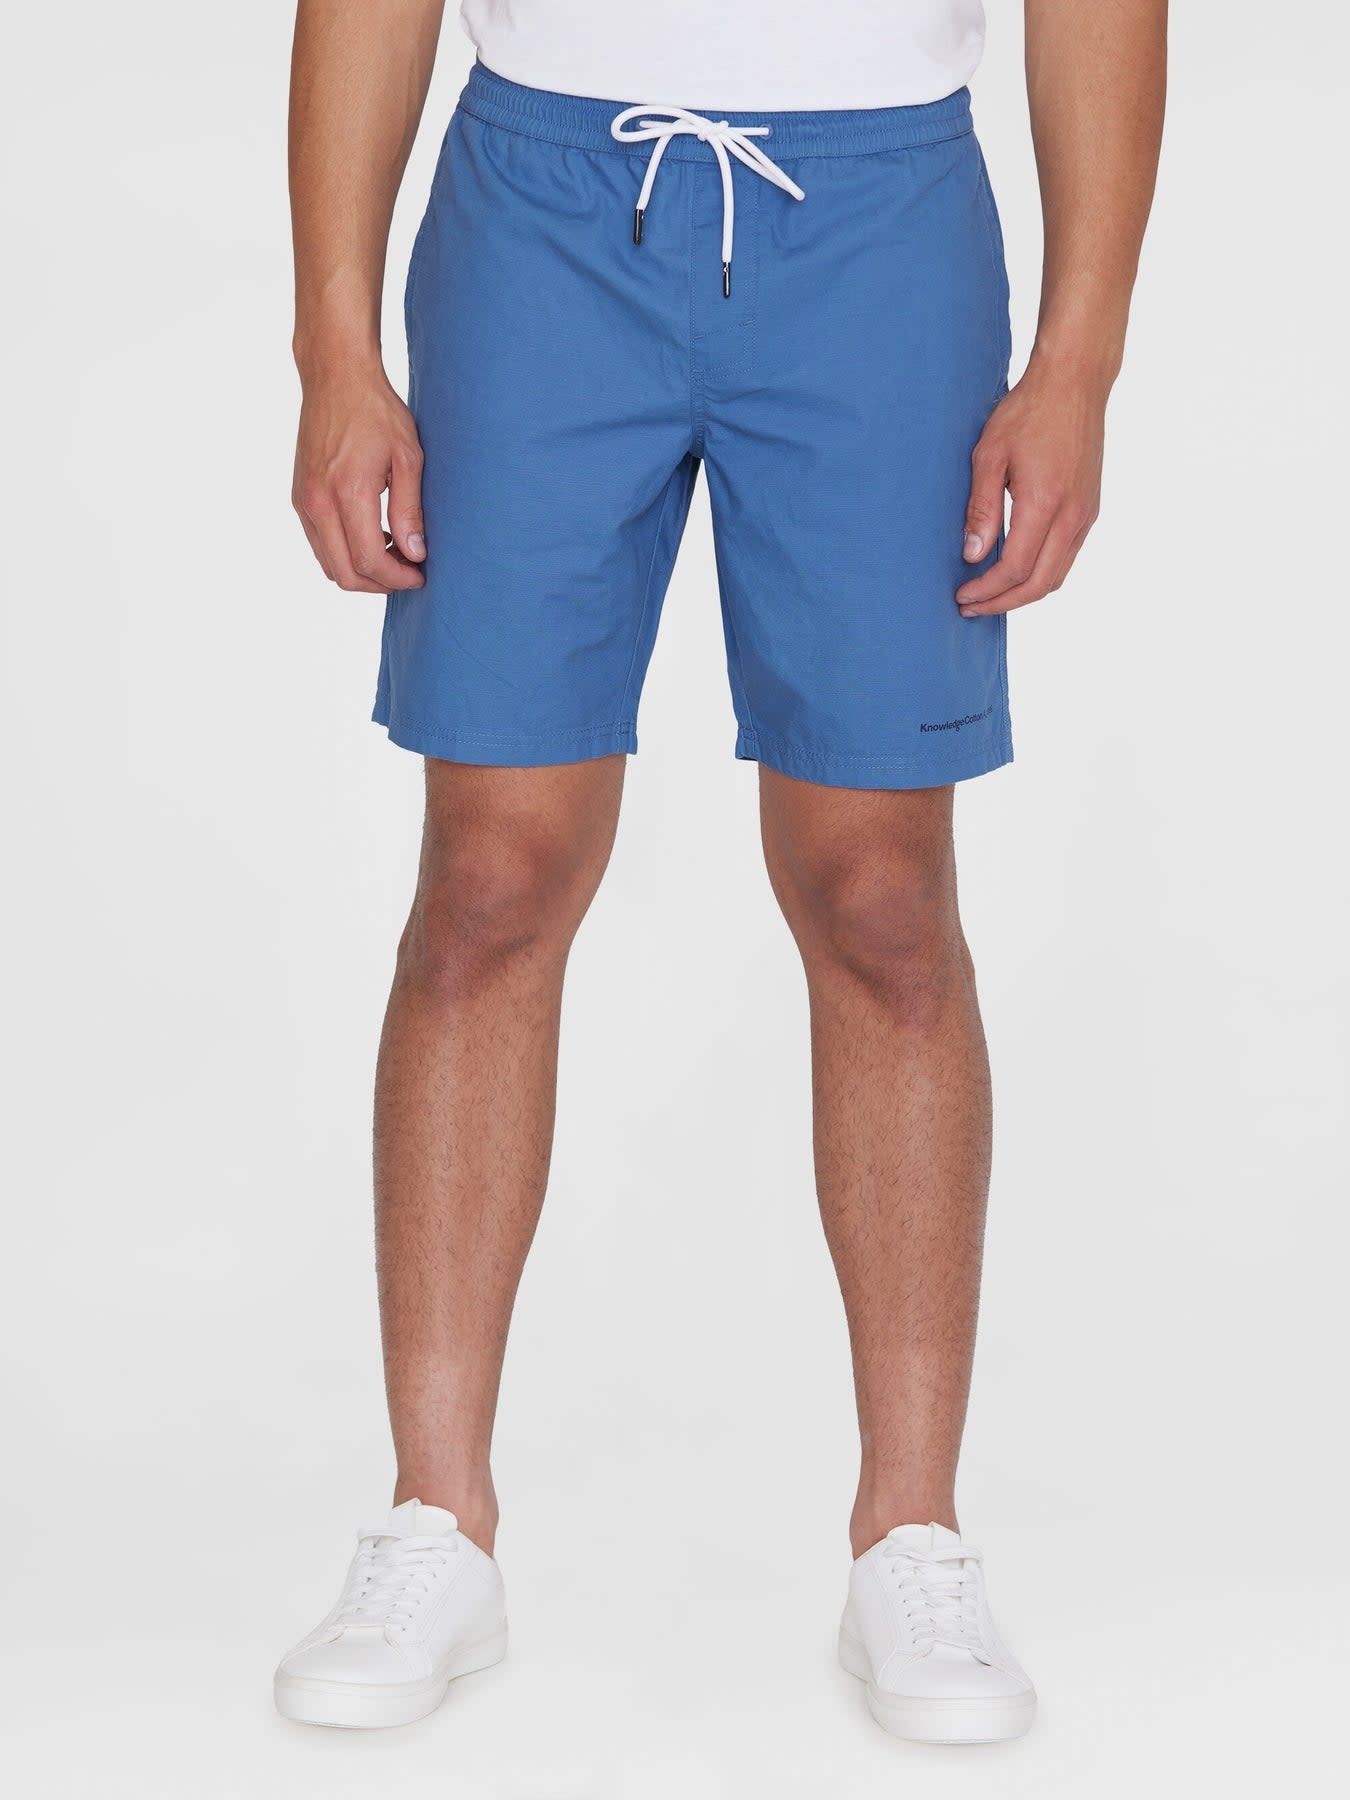 KnowledgeCotton Apparel KnowledgeCotton, Boardwalk shorts, moonlight blue, XL